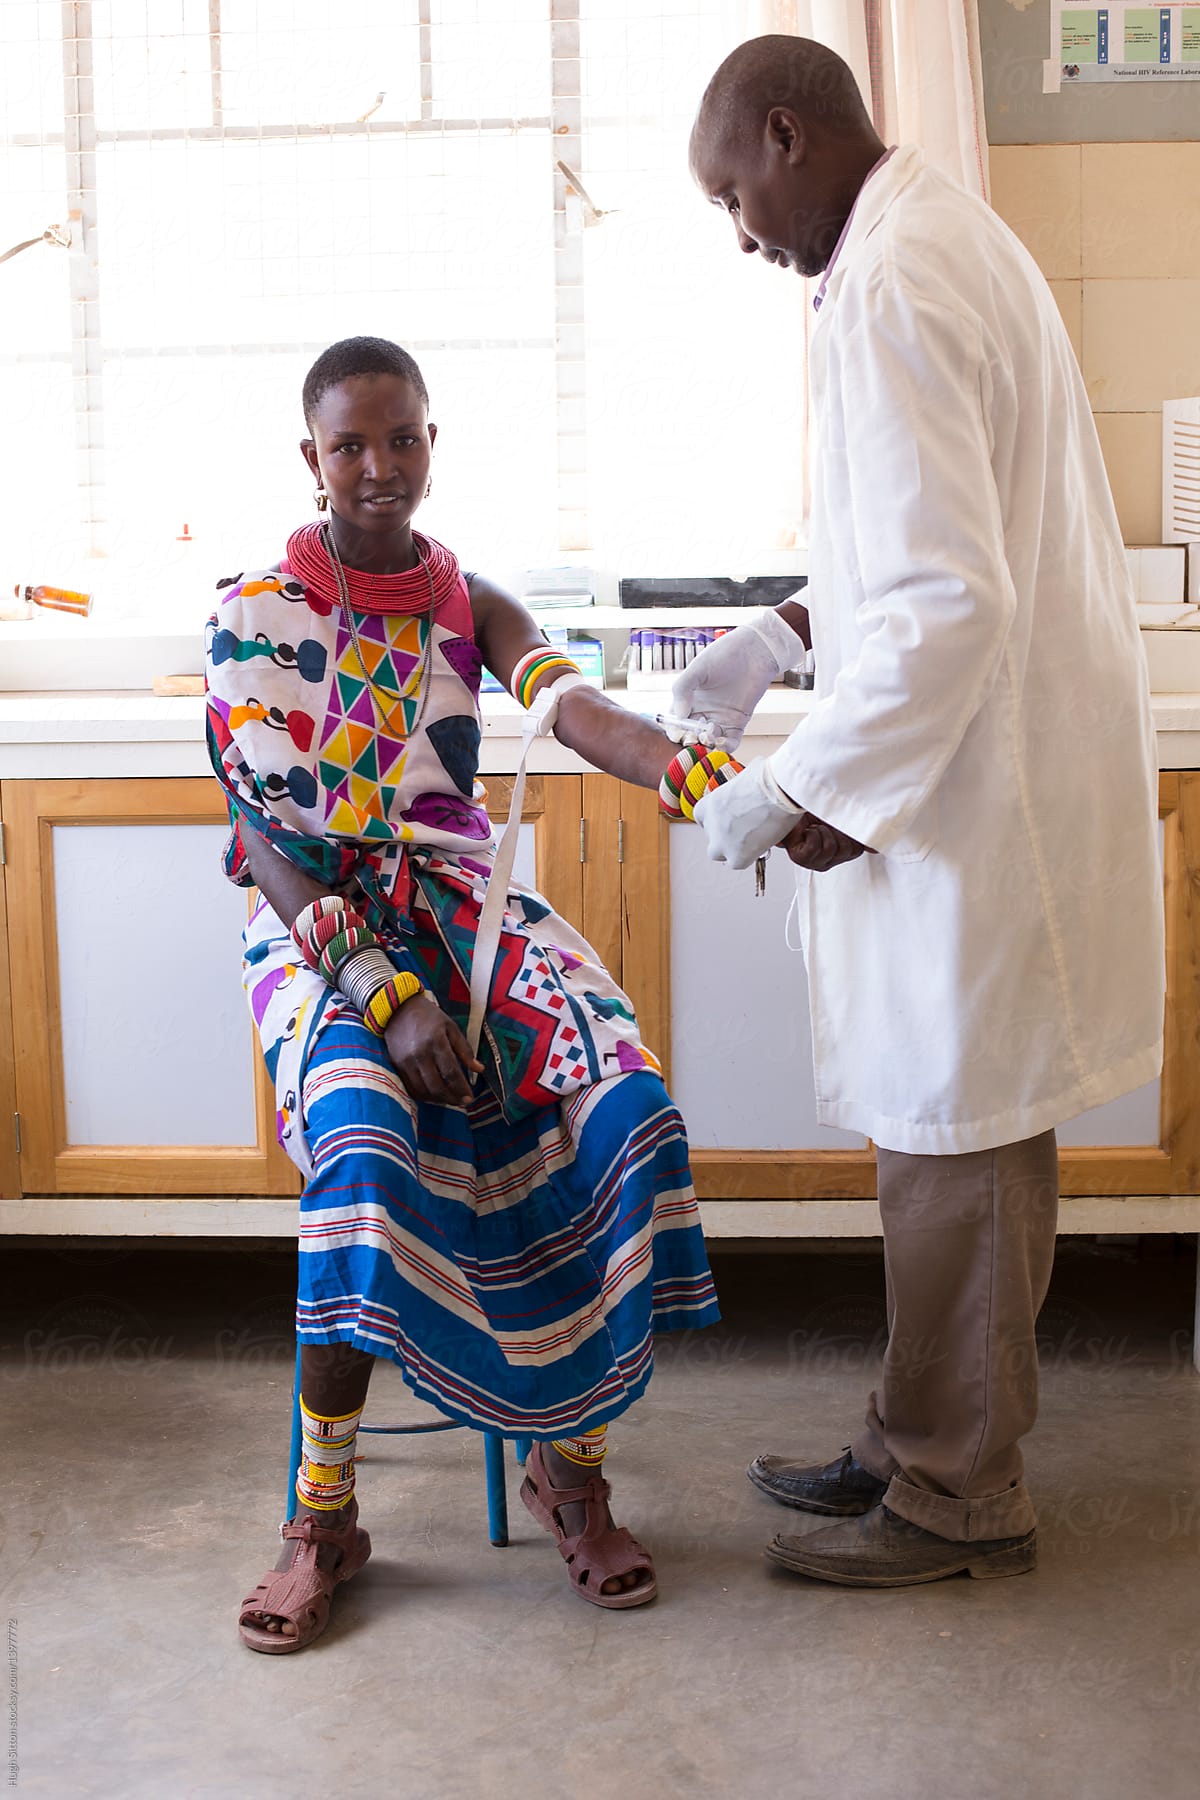 Doctor working in clinic, Kenya. Africa